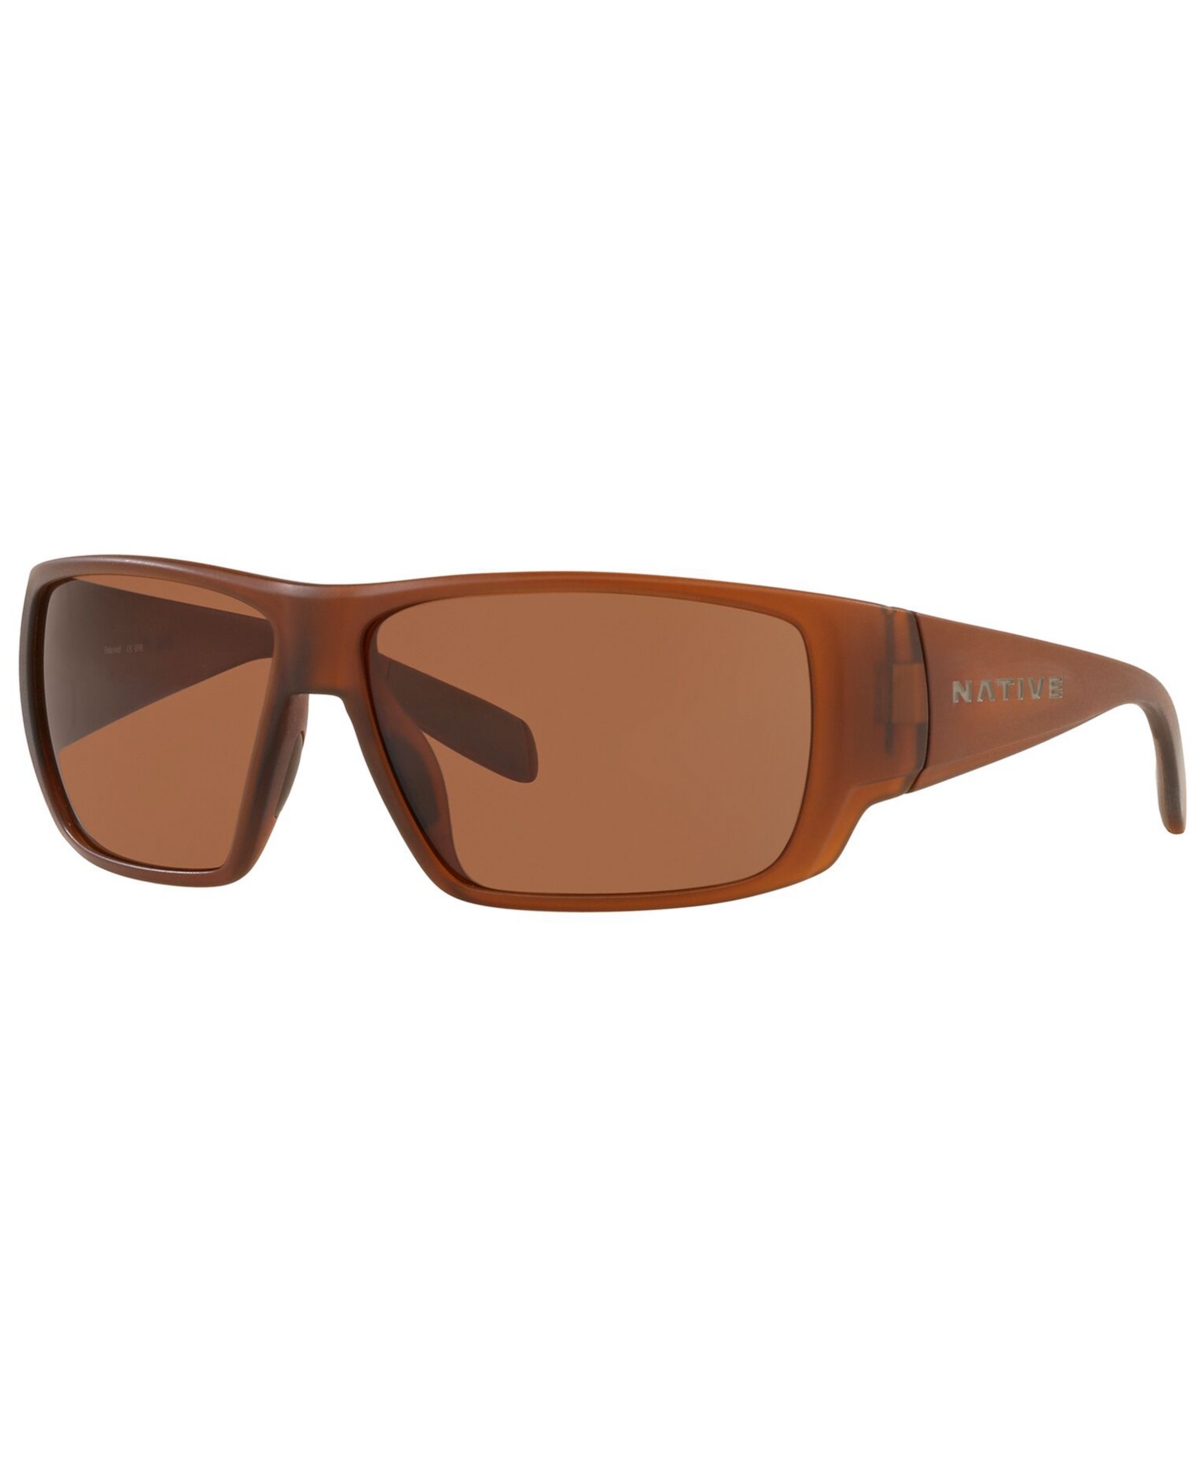 Native Men's Polarized Sunglasses, XD0061 64 - BROWN CRYSTAL/BROWN